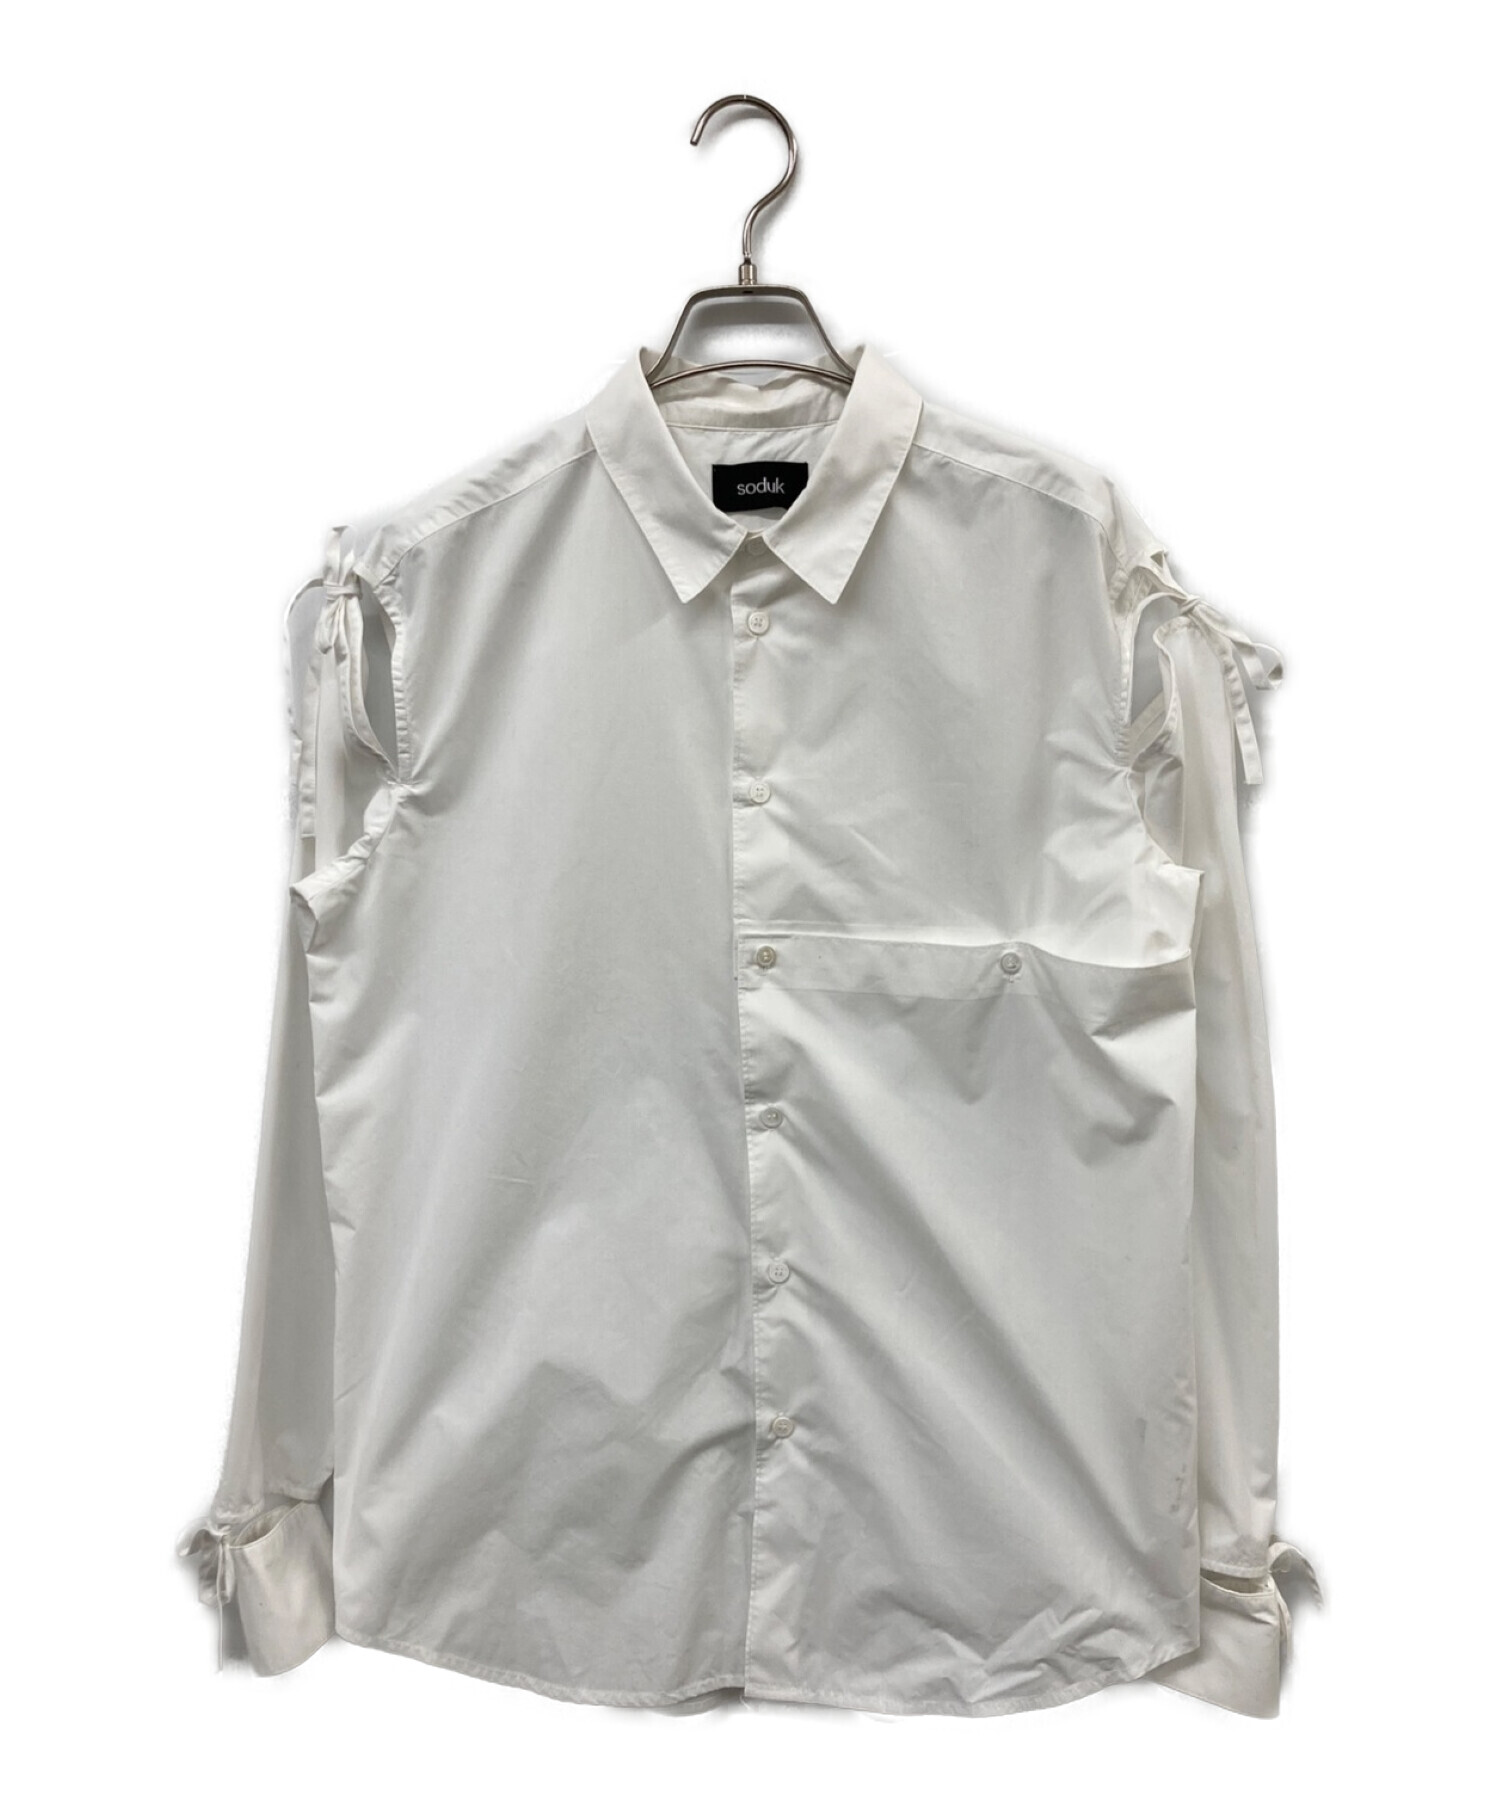 soduk (スドーク) 21SS 0006 ribbon everywhere shirt ホワイト サイズ:FREE